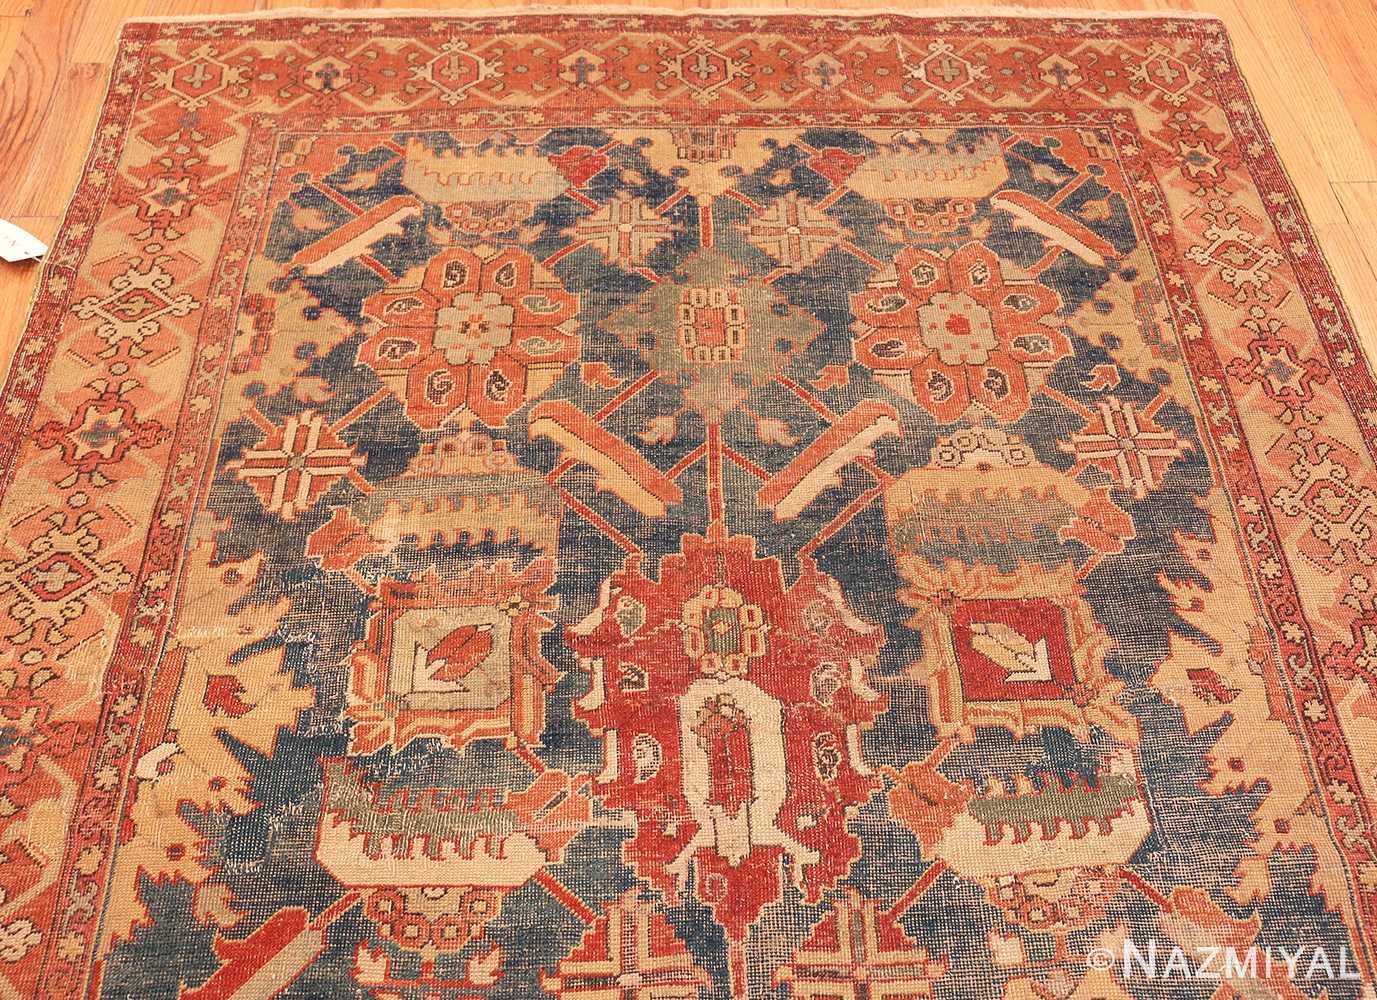 Details Collectible Antique Caucasian Karabagh Rug 70553 by Nazmiyal NYC